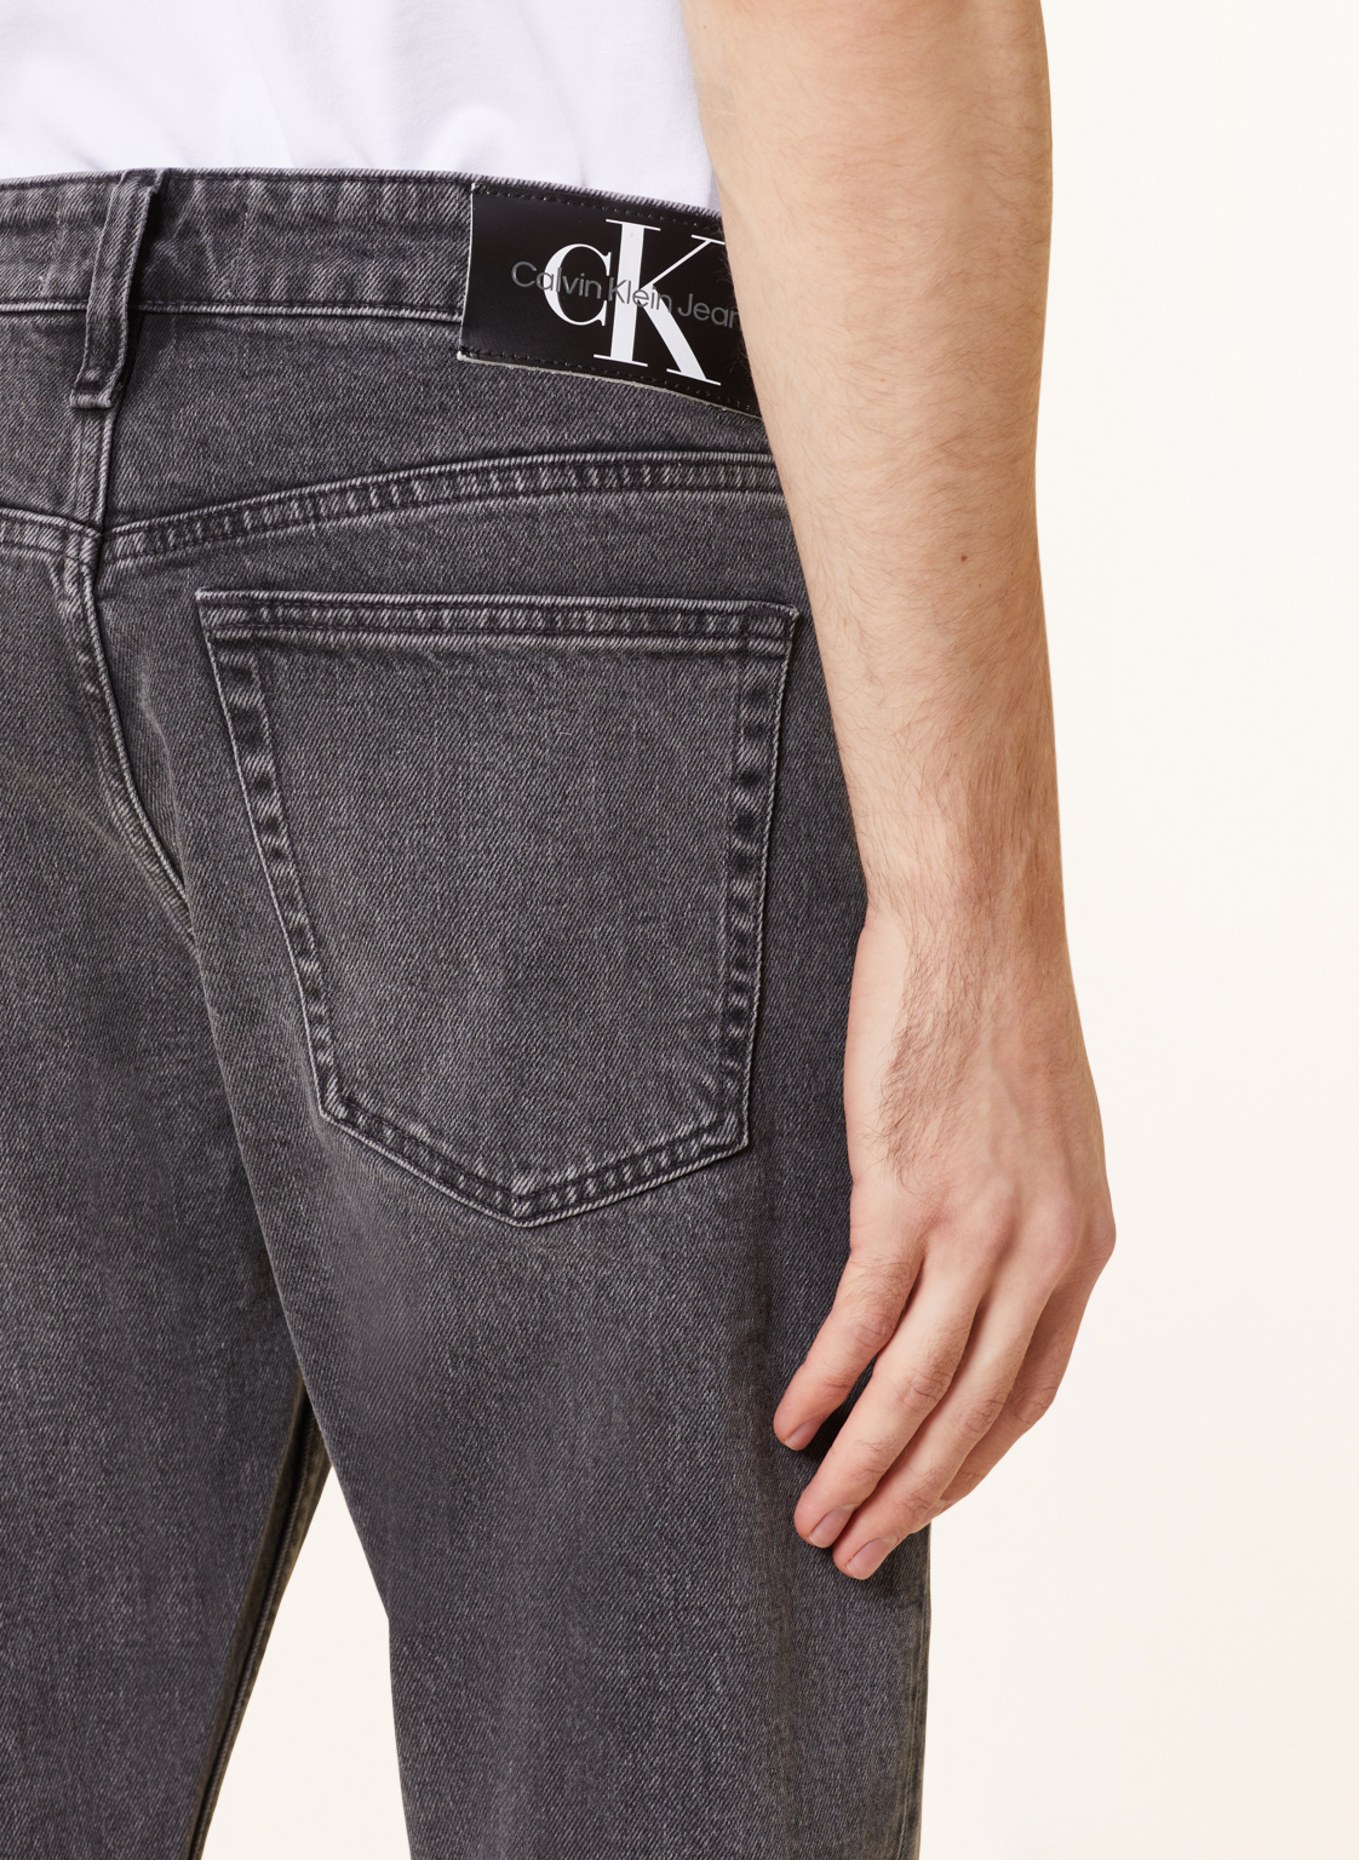 Calvin Klein Jeans Jeans in Slim grau Fit Taper